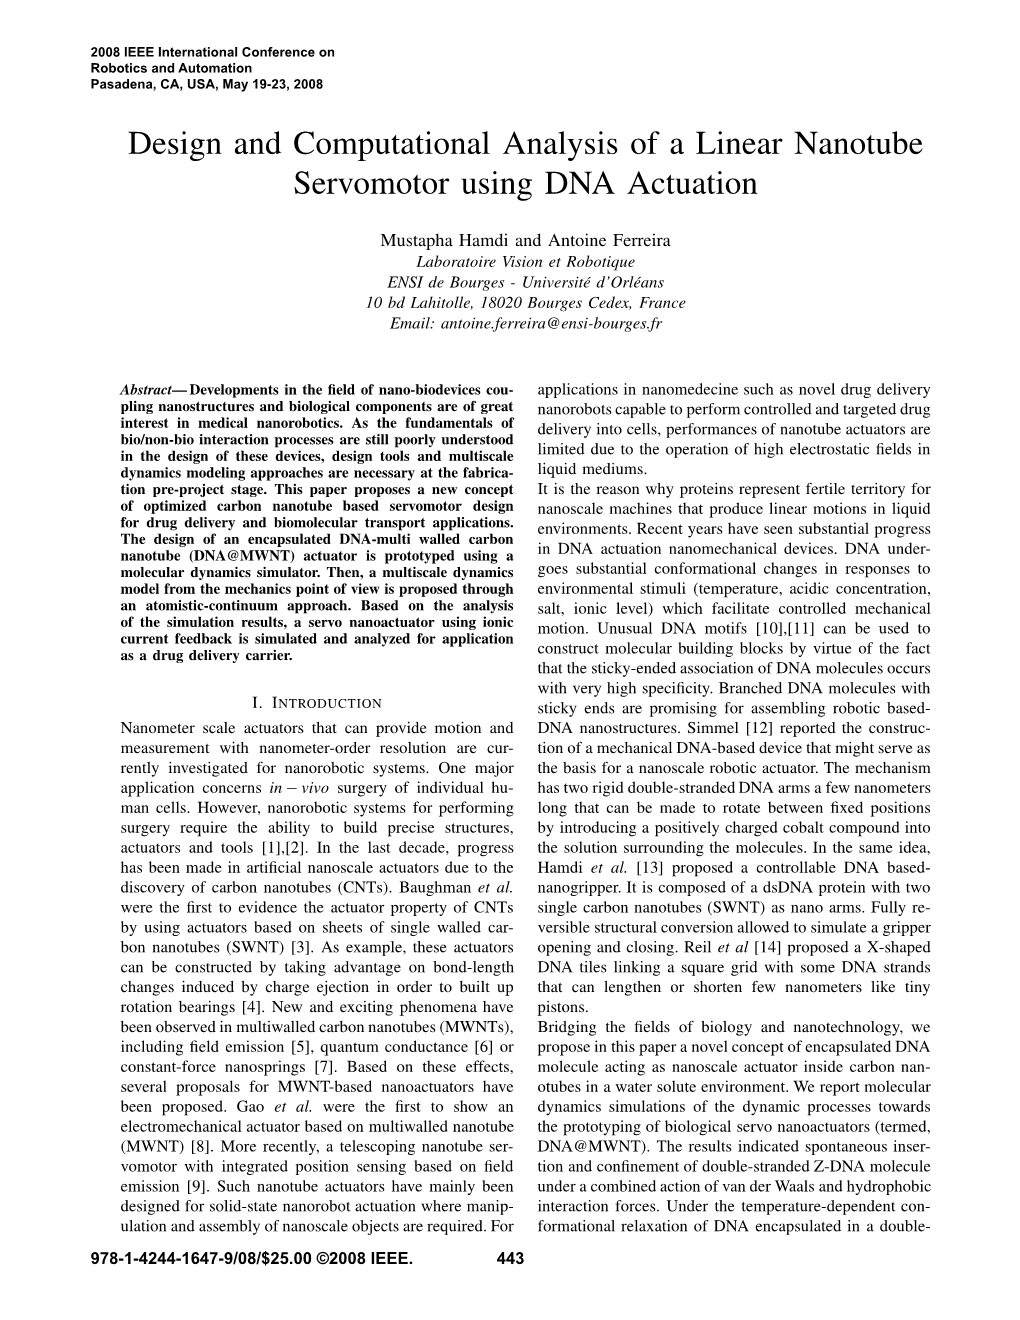 Design and Computational Analysis of a Linear Nanotube Servomotor Using DNA Actuation